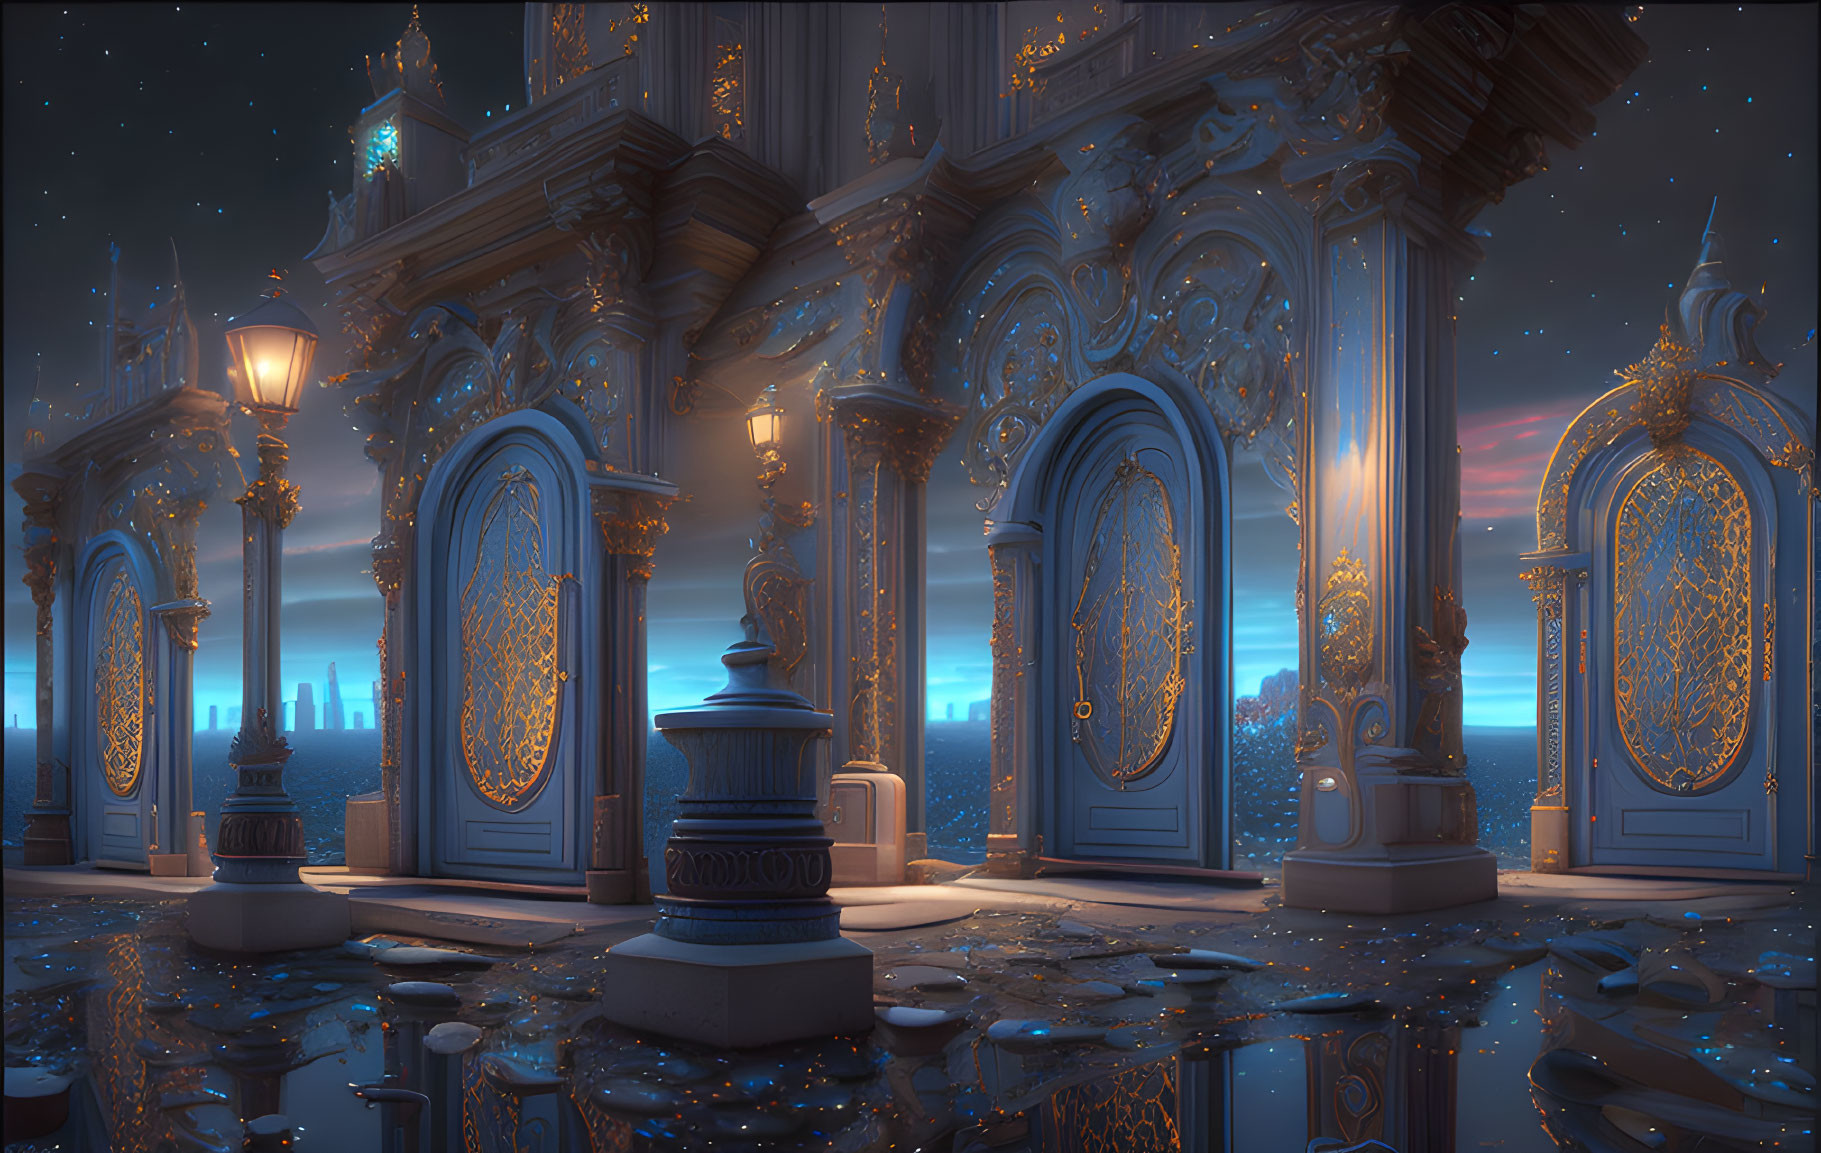 Elaborate Fantasy Palace Balcony with Golden Doors and Lanterns